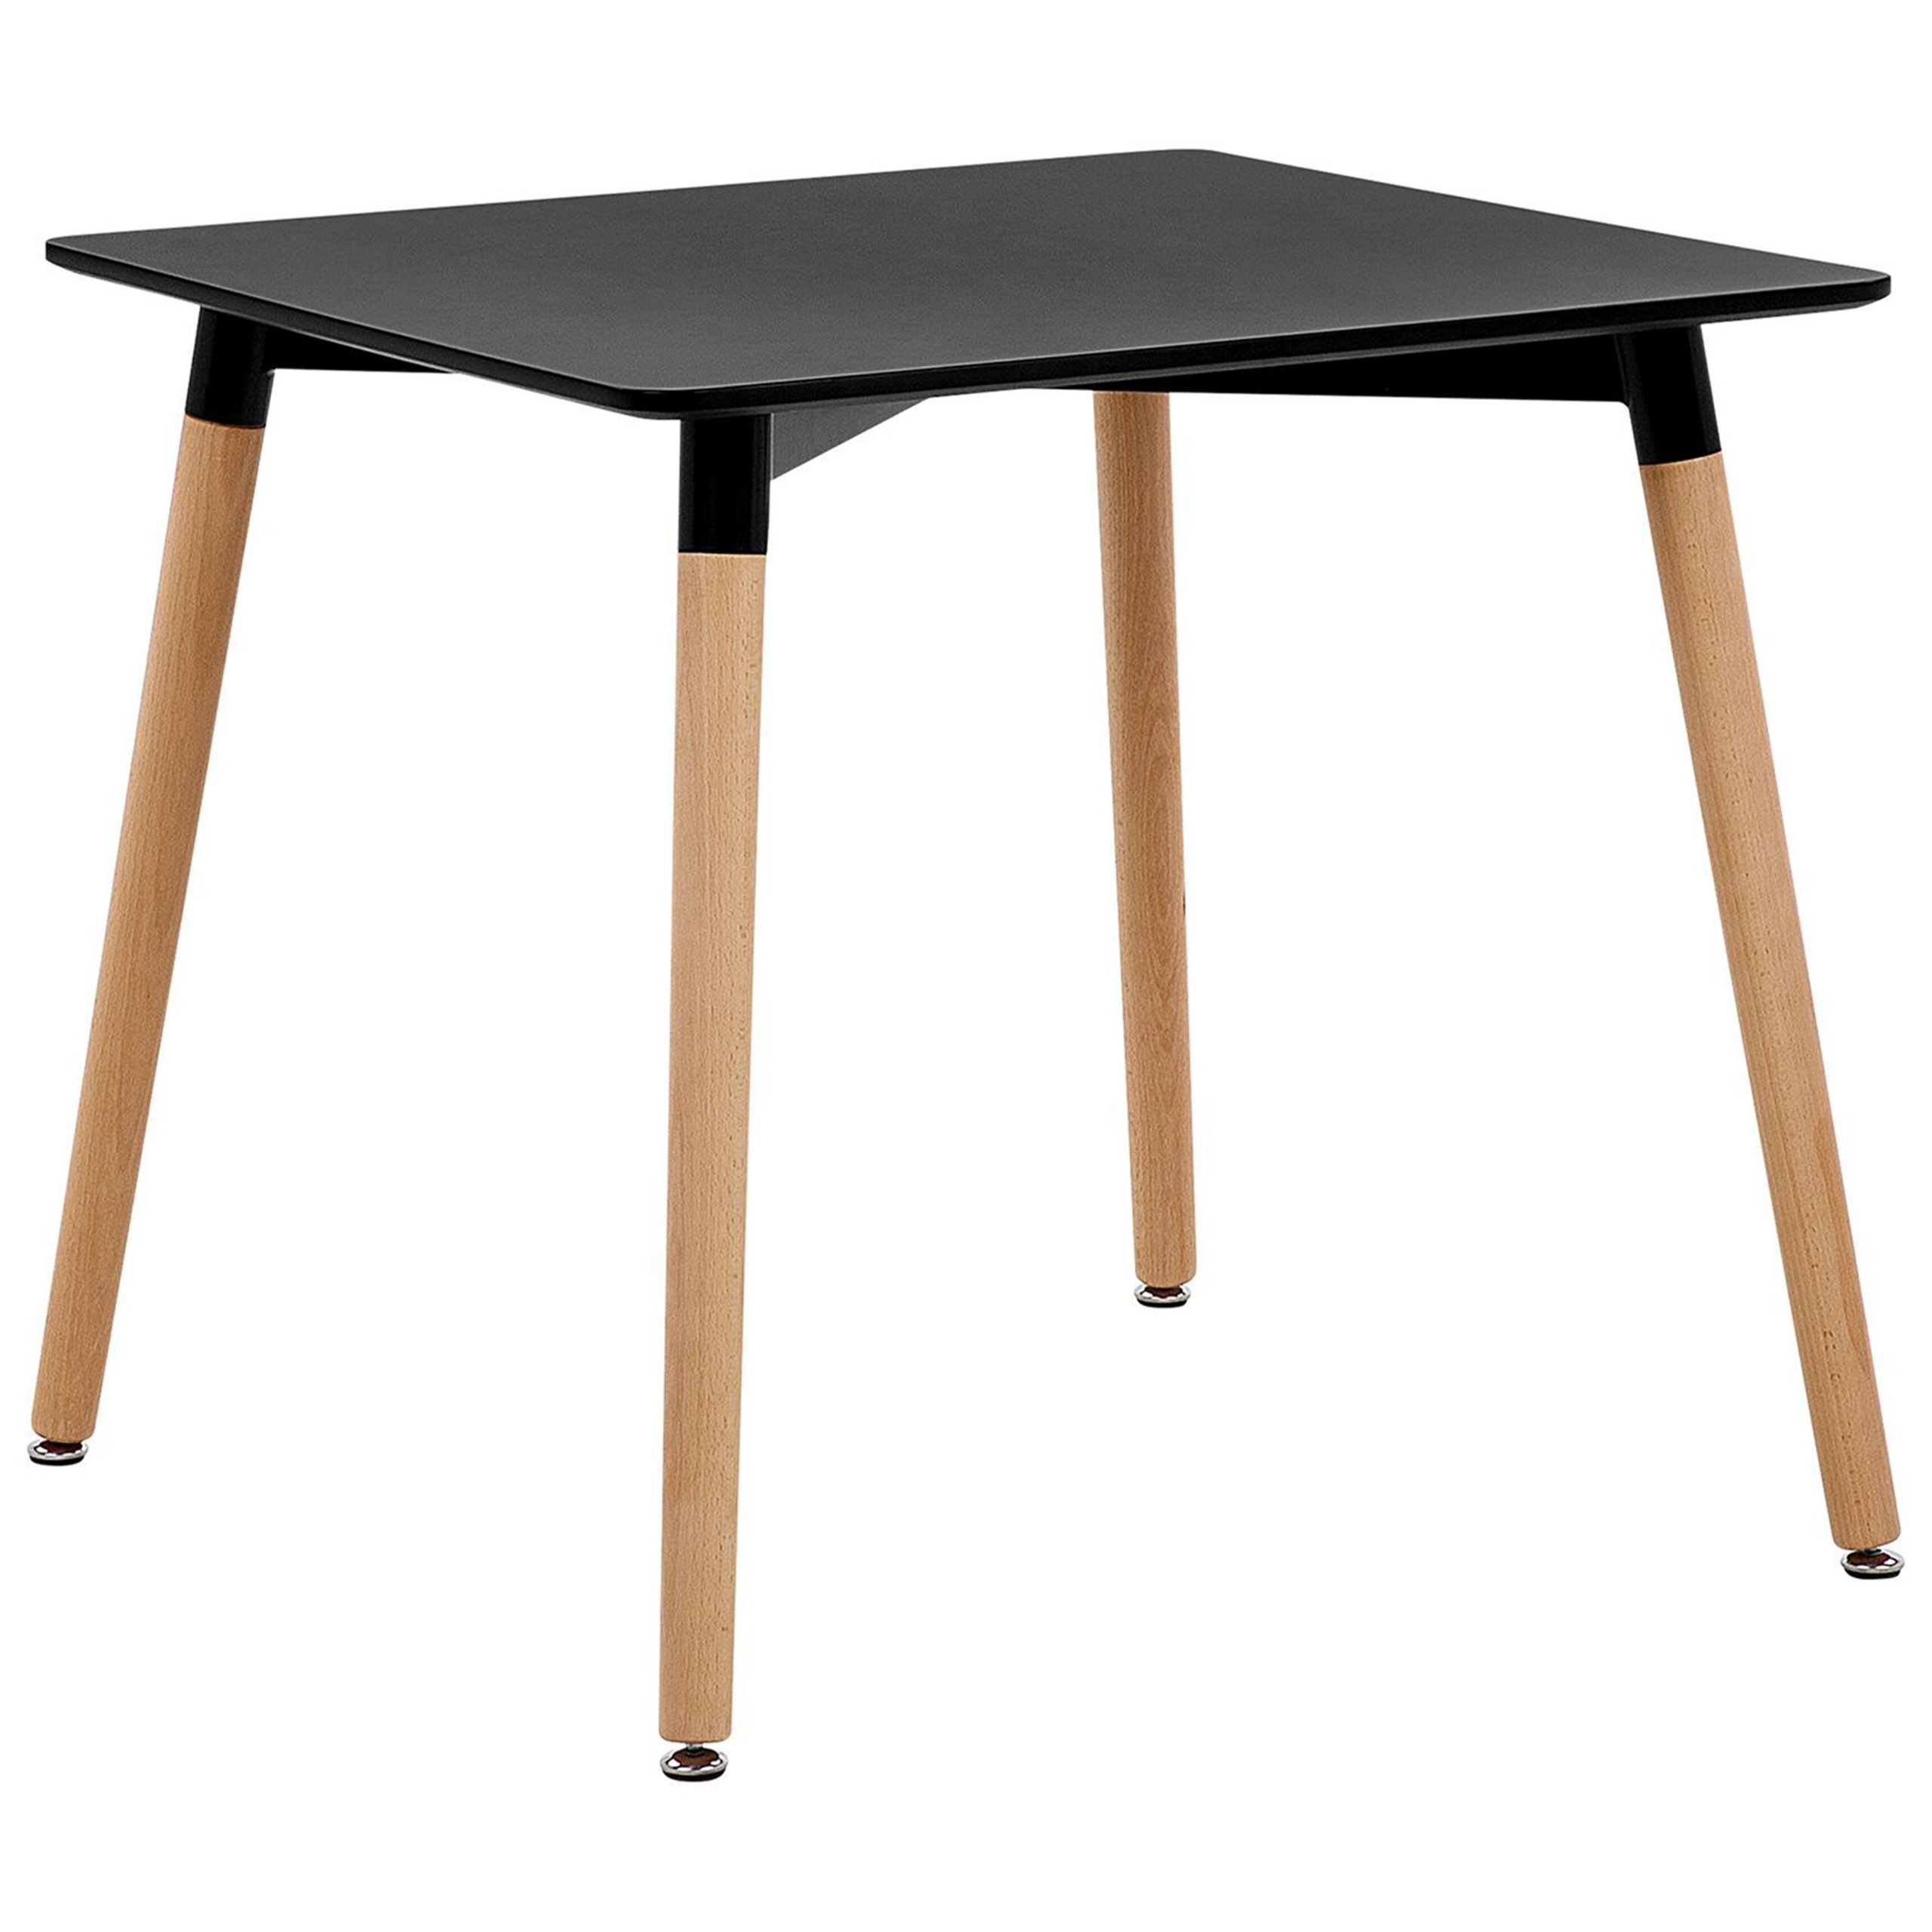 Beliani Dining Table Black Top Light Wood Legs Square 80 x 80 cm Scandinavian Modern